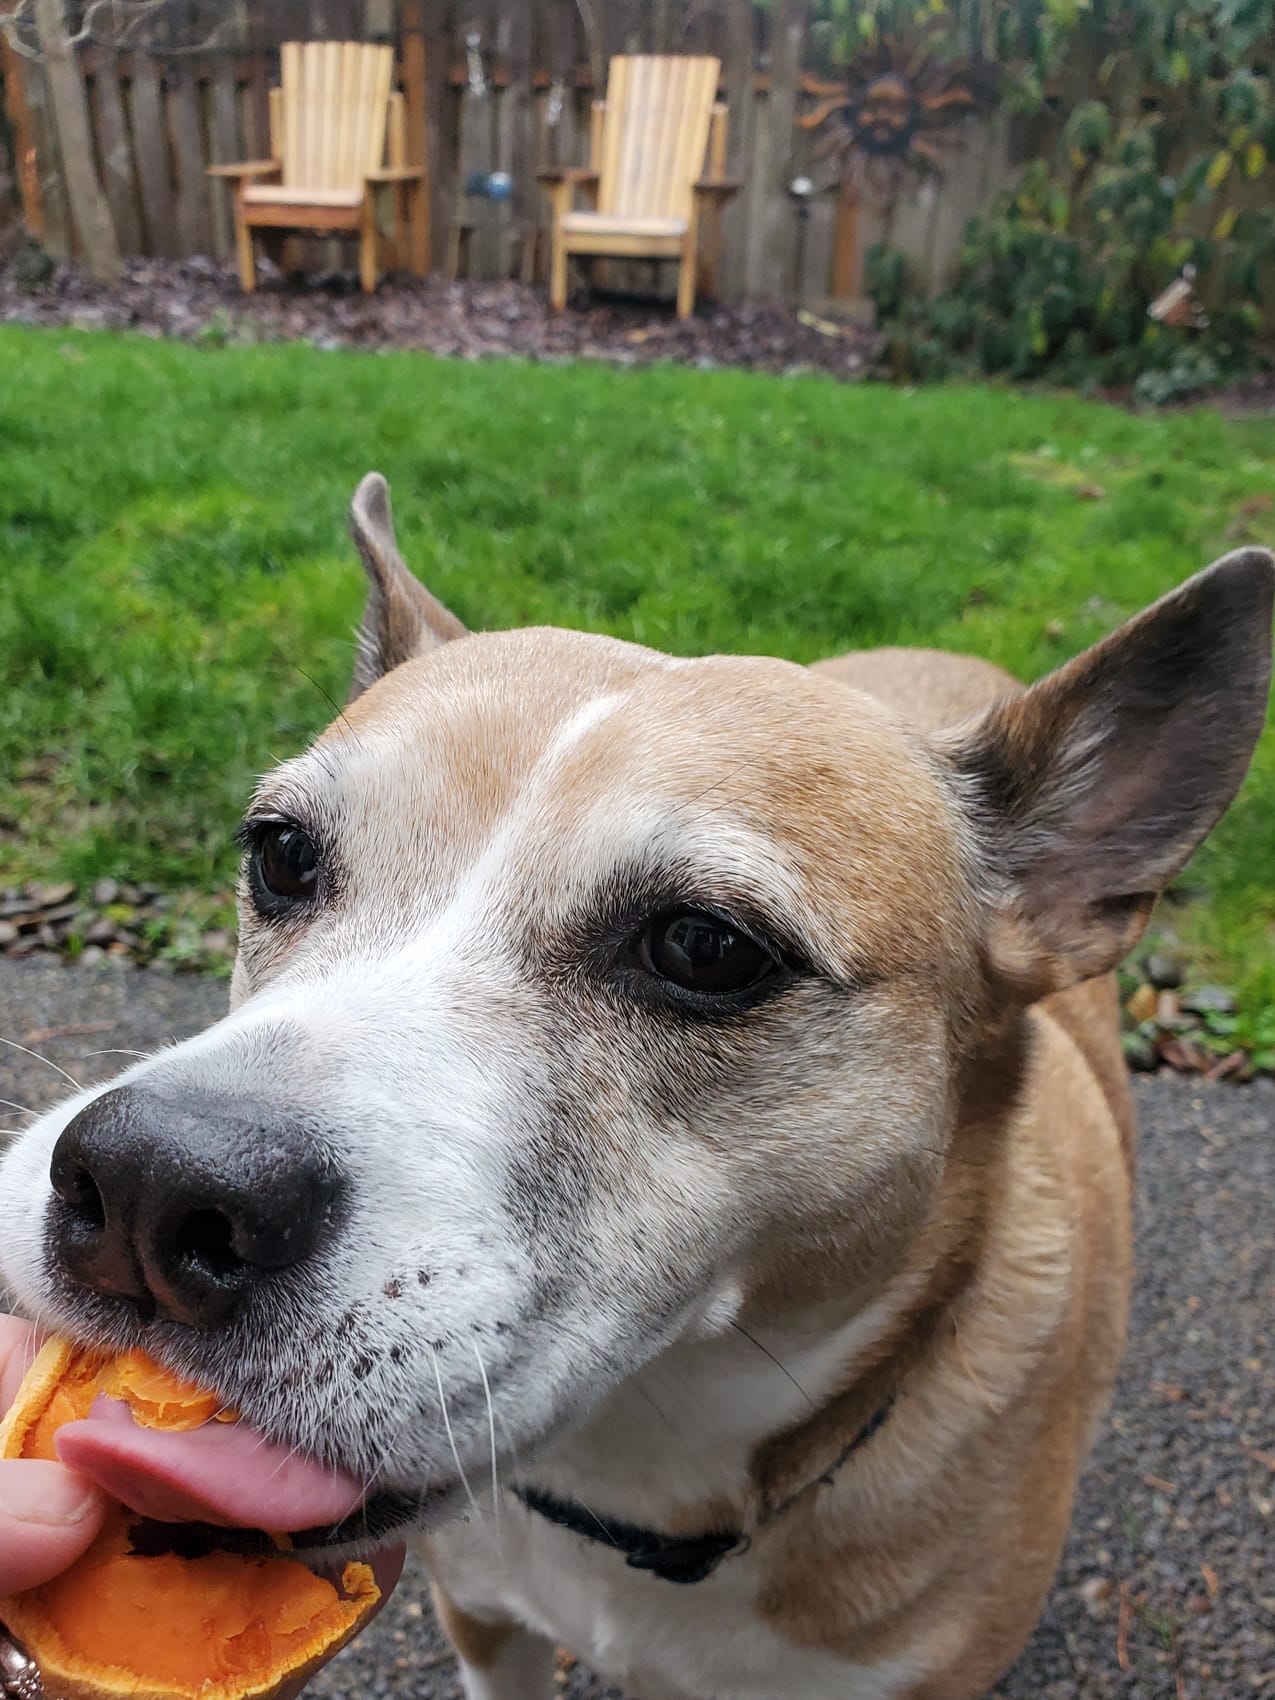 Sweet Potato Dog Chews